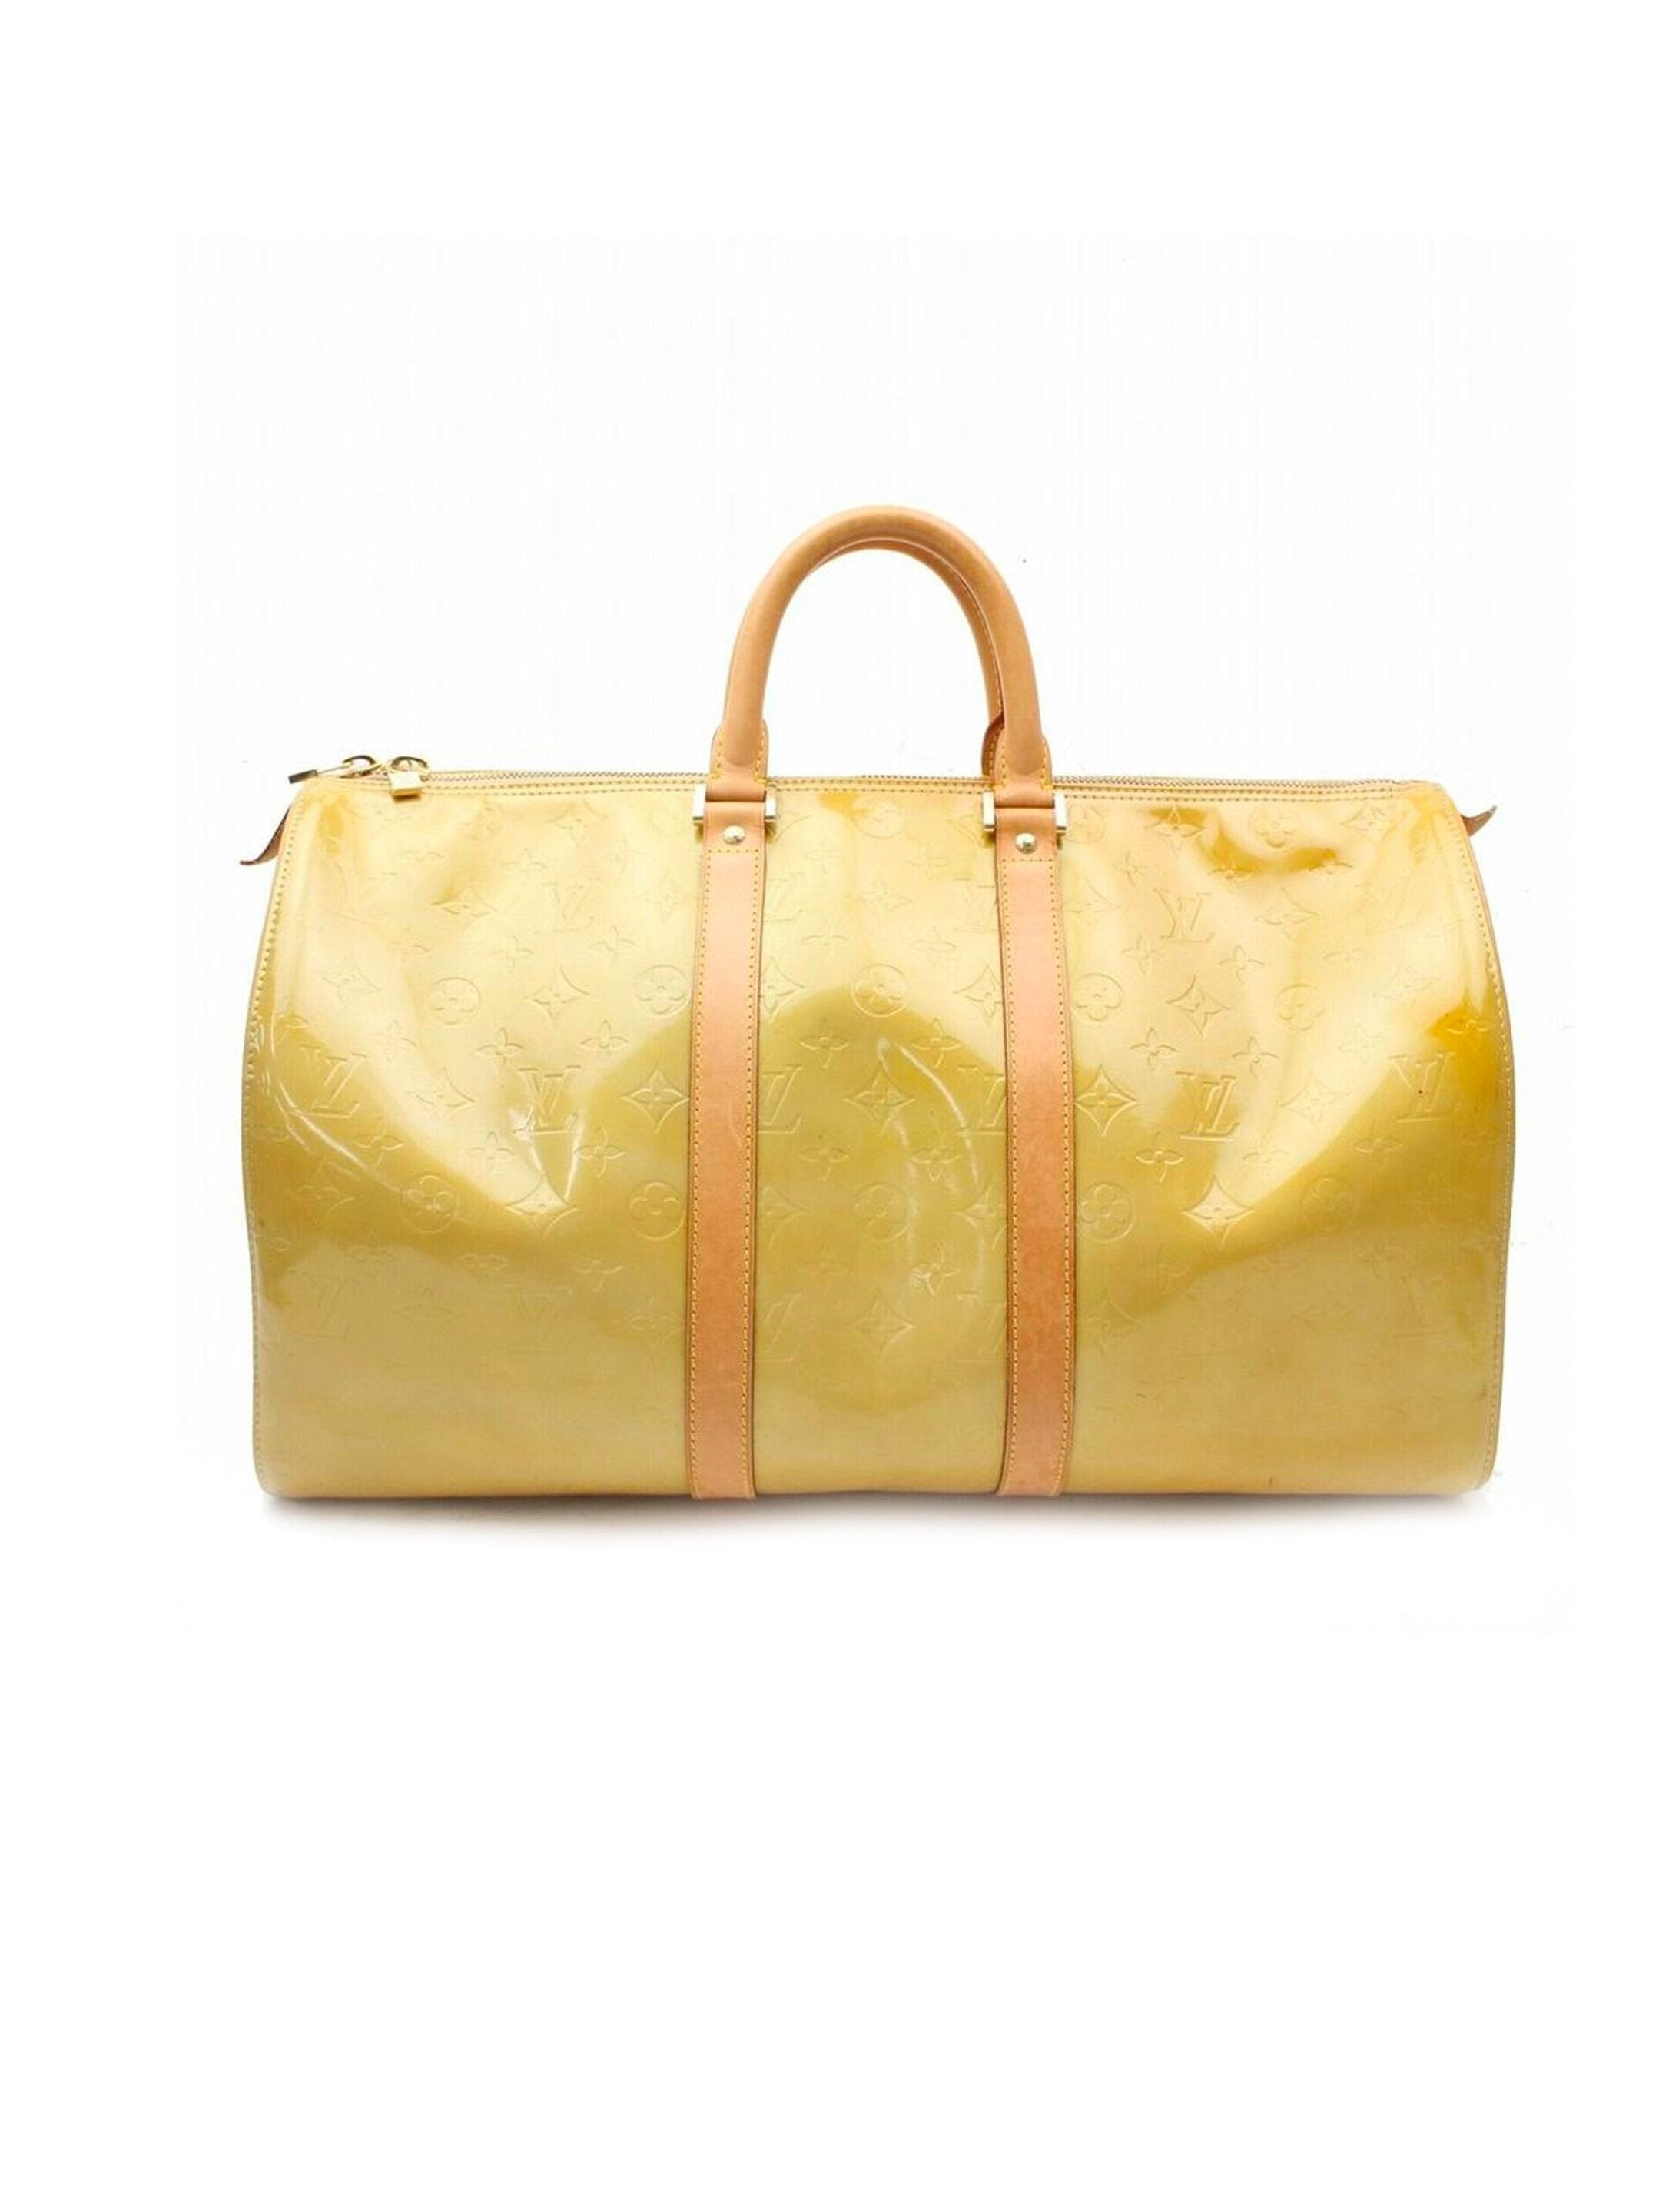 LOUIS VUITTON Keepall 45 Vernis Travel Bag Yellow